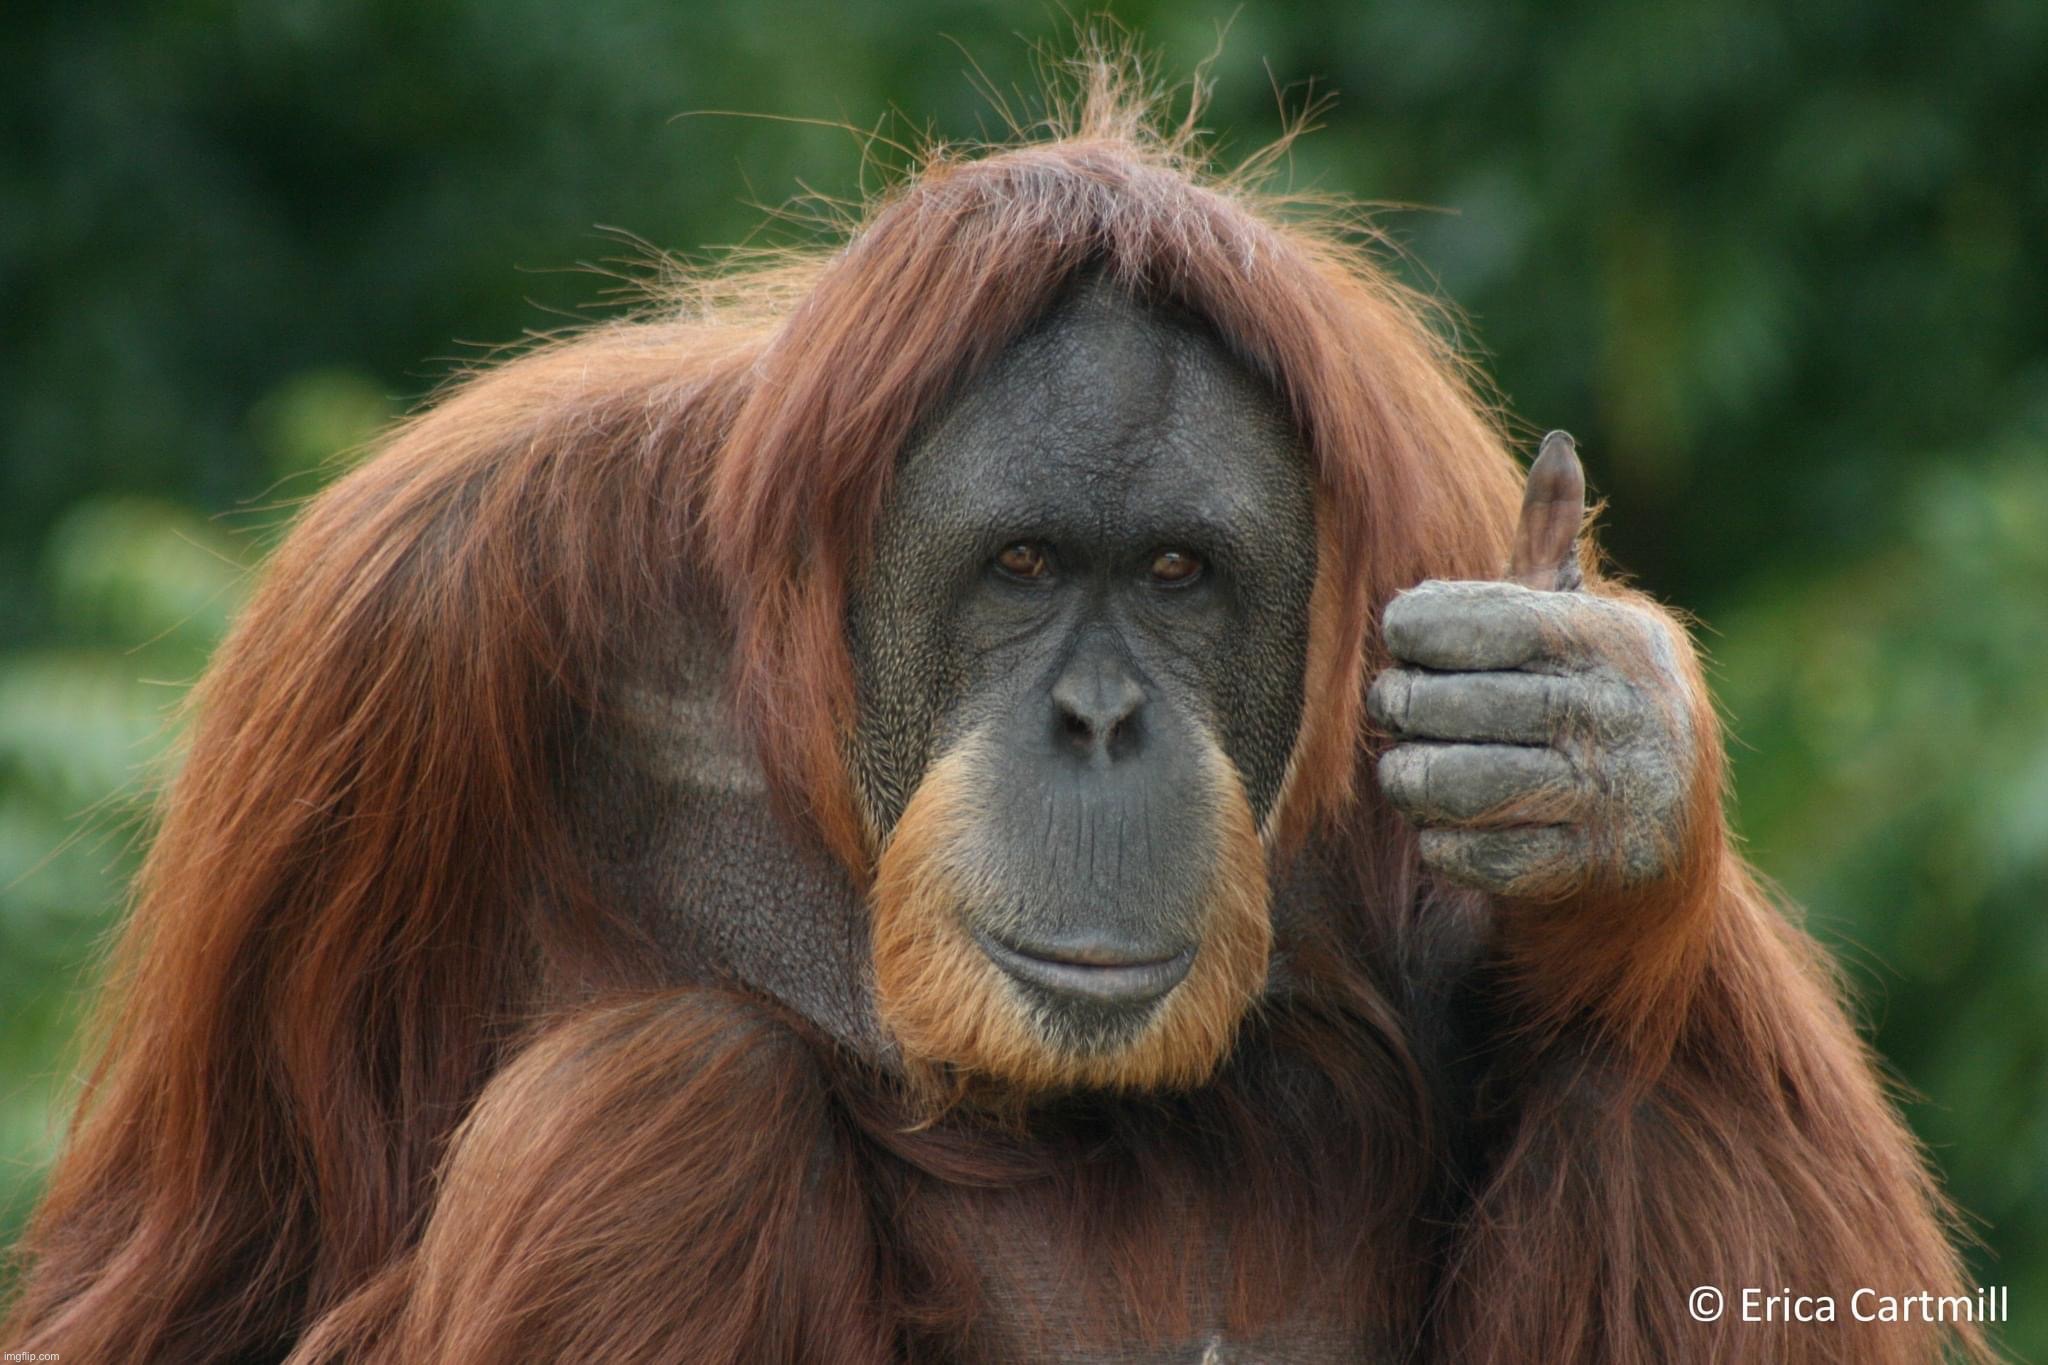 Thumbs up orangutan | image tagged in thumbs up orangutan | made w/ Imgflip meme maker